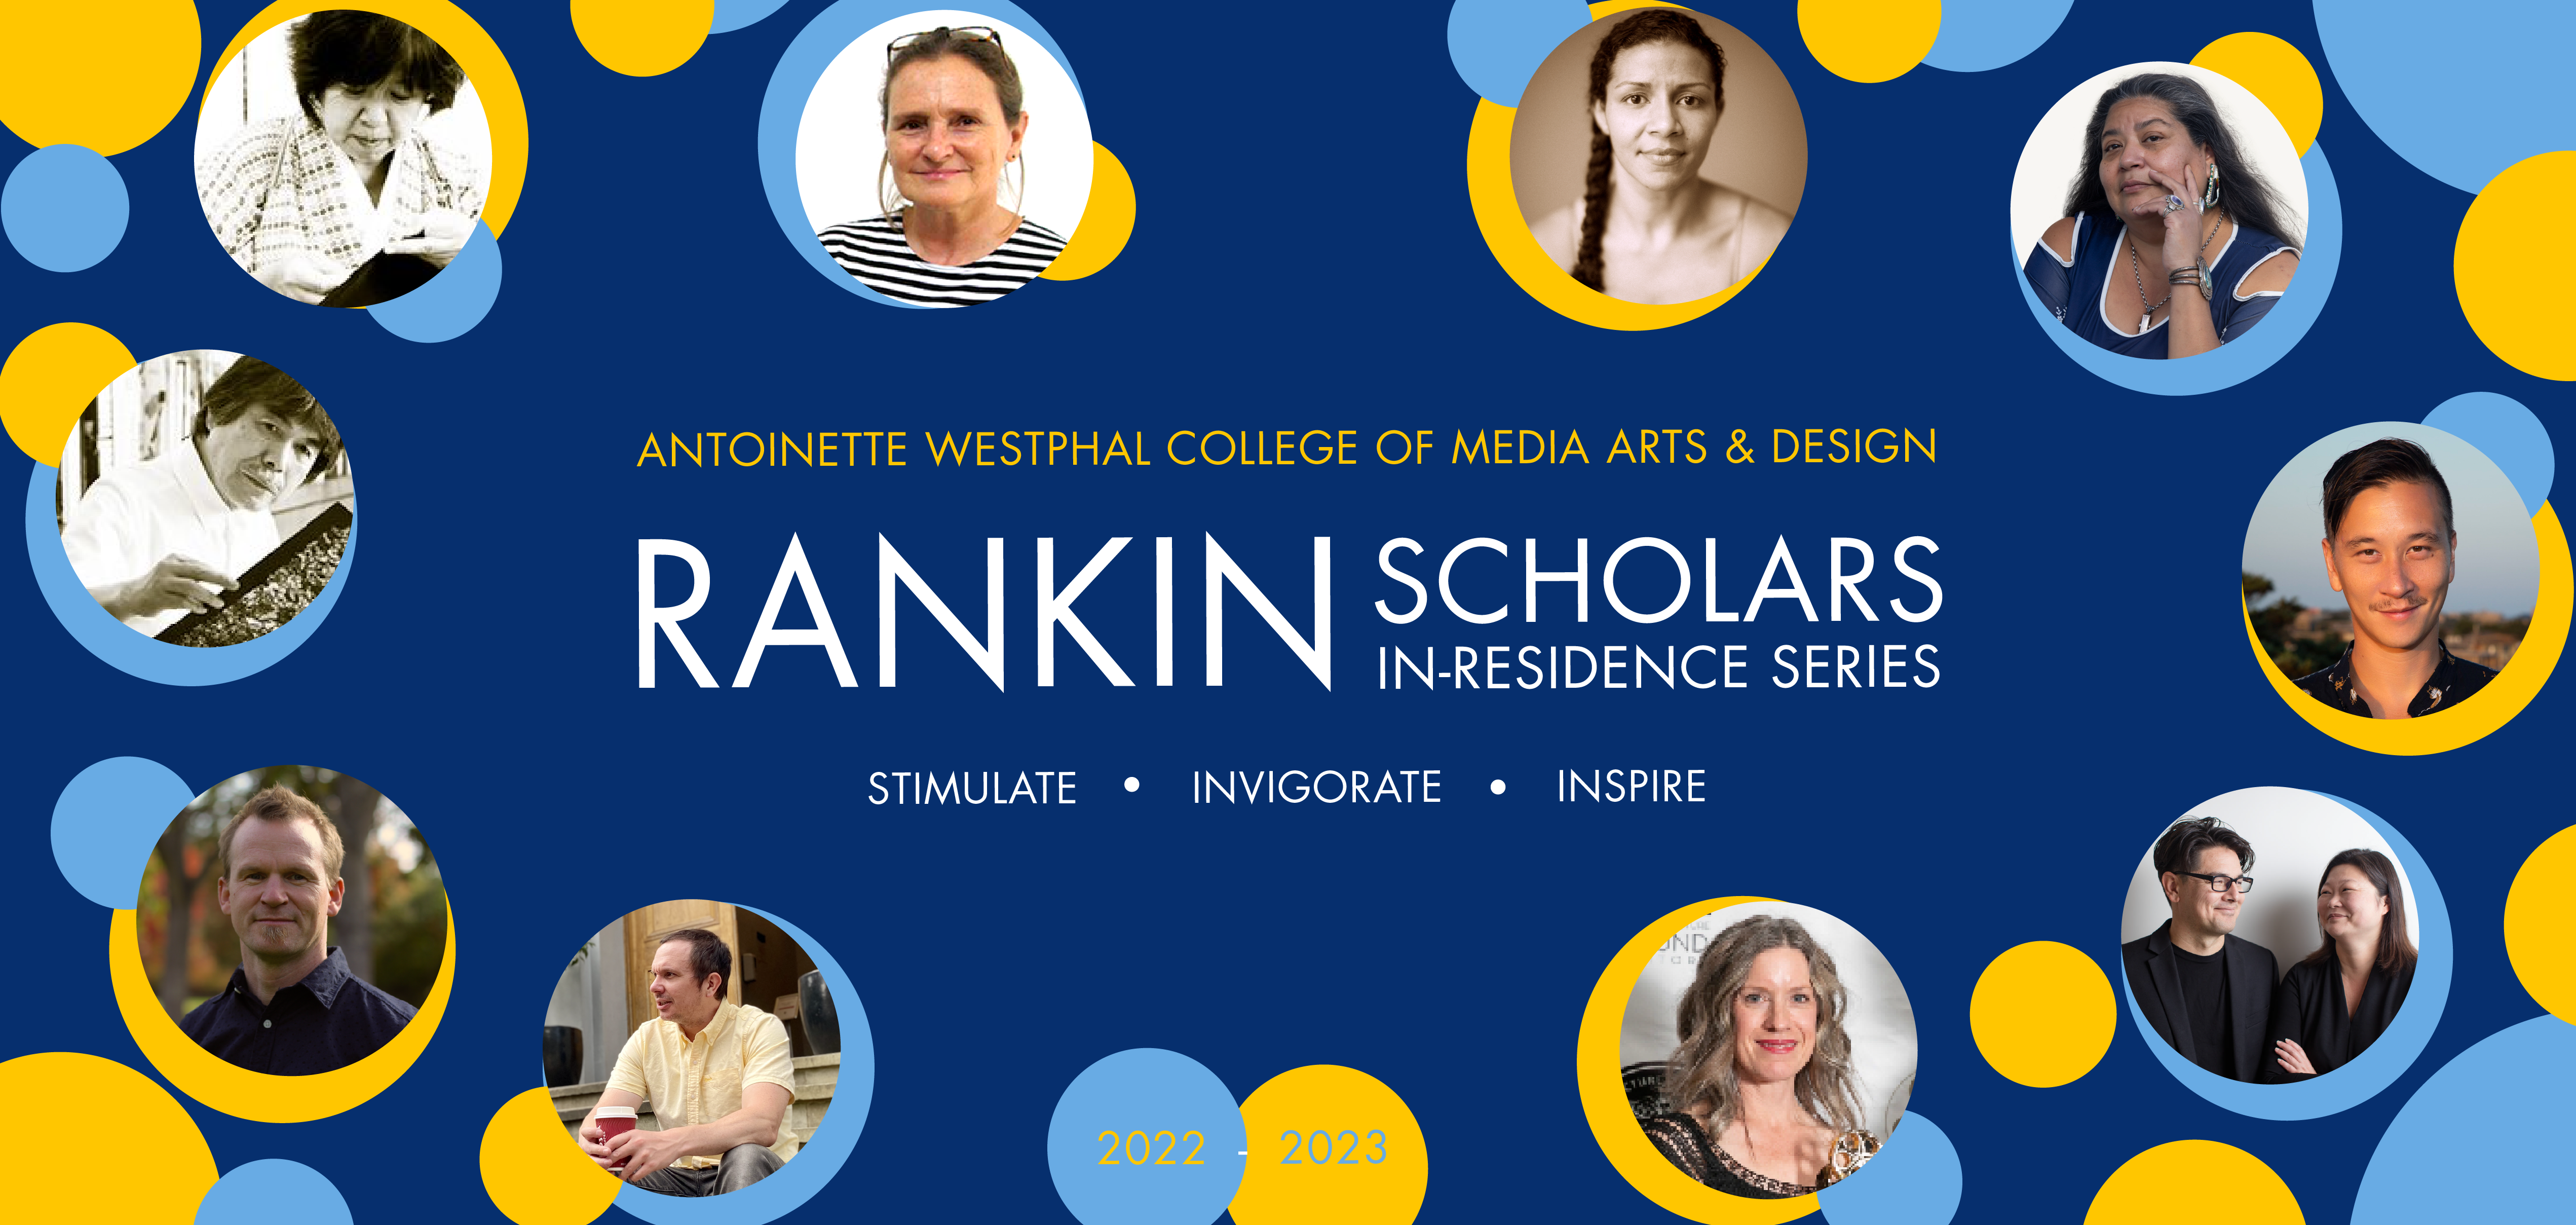 Rankin Scholars-in-Residence Series 2022-23